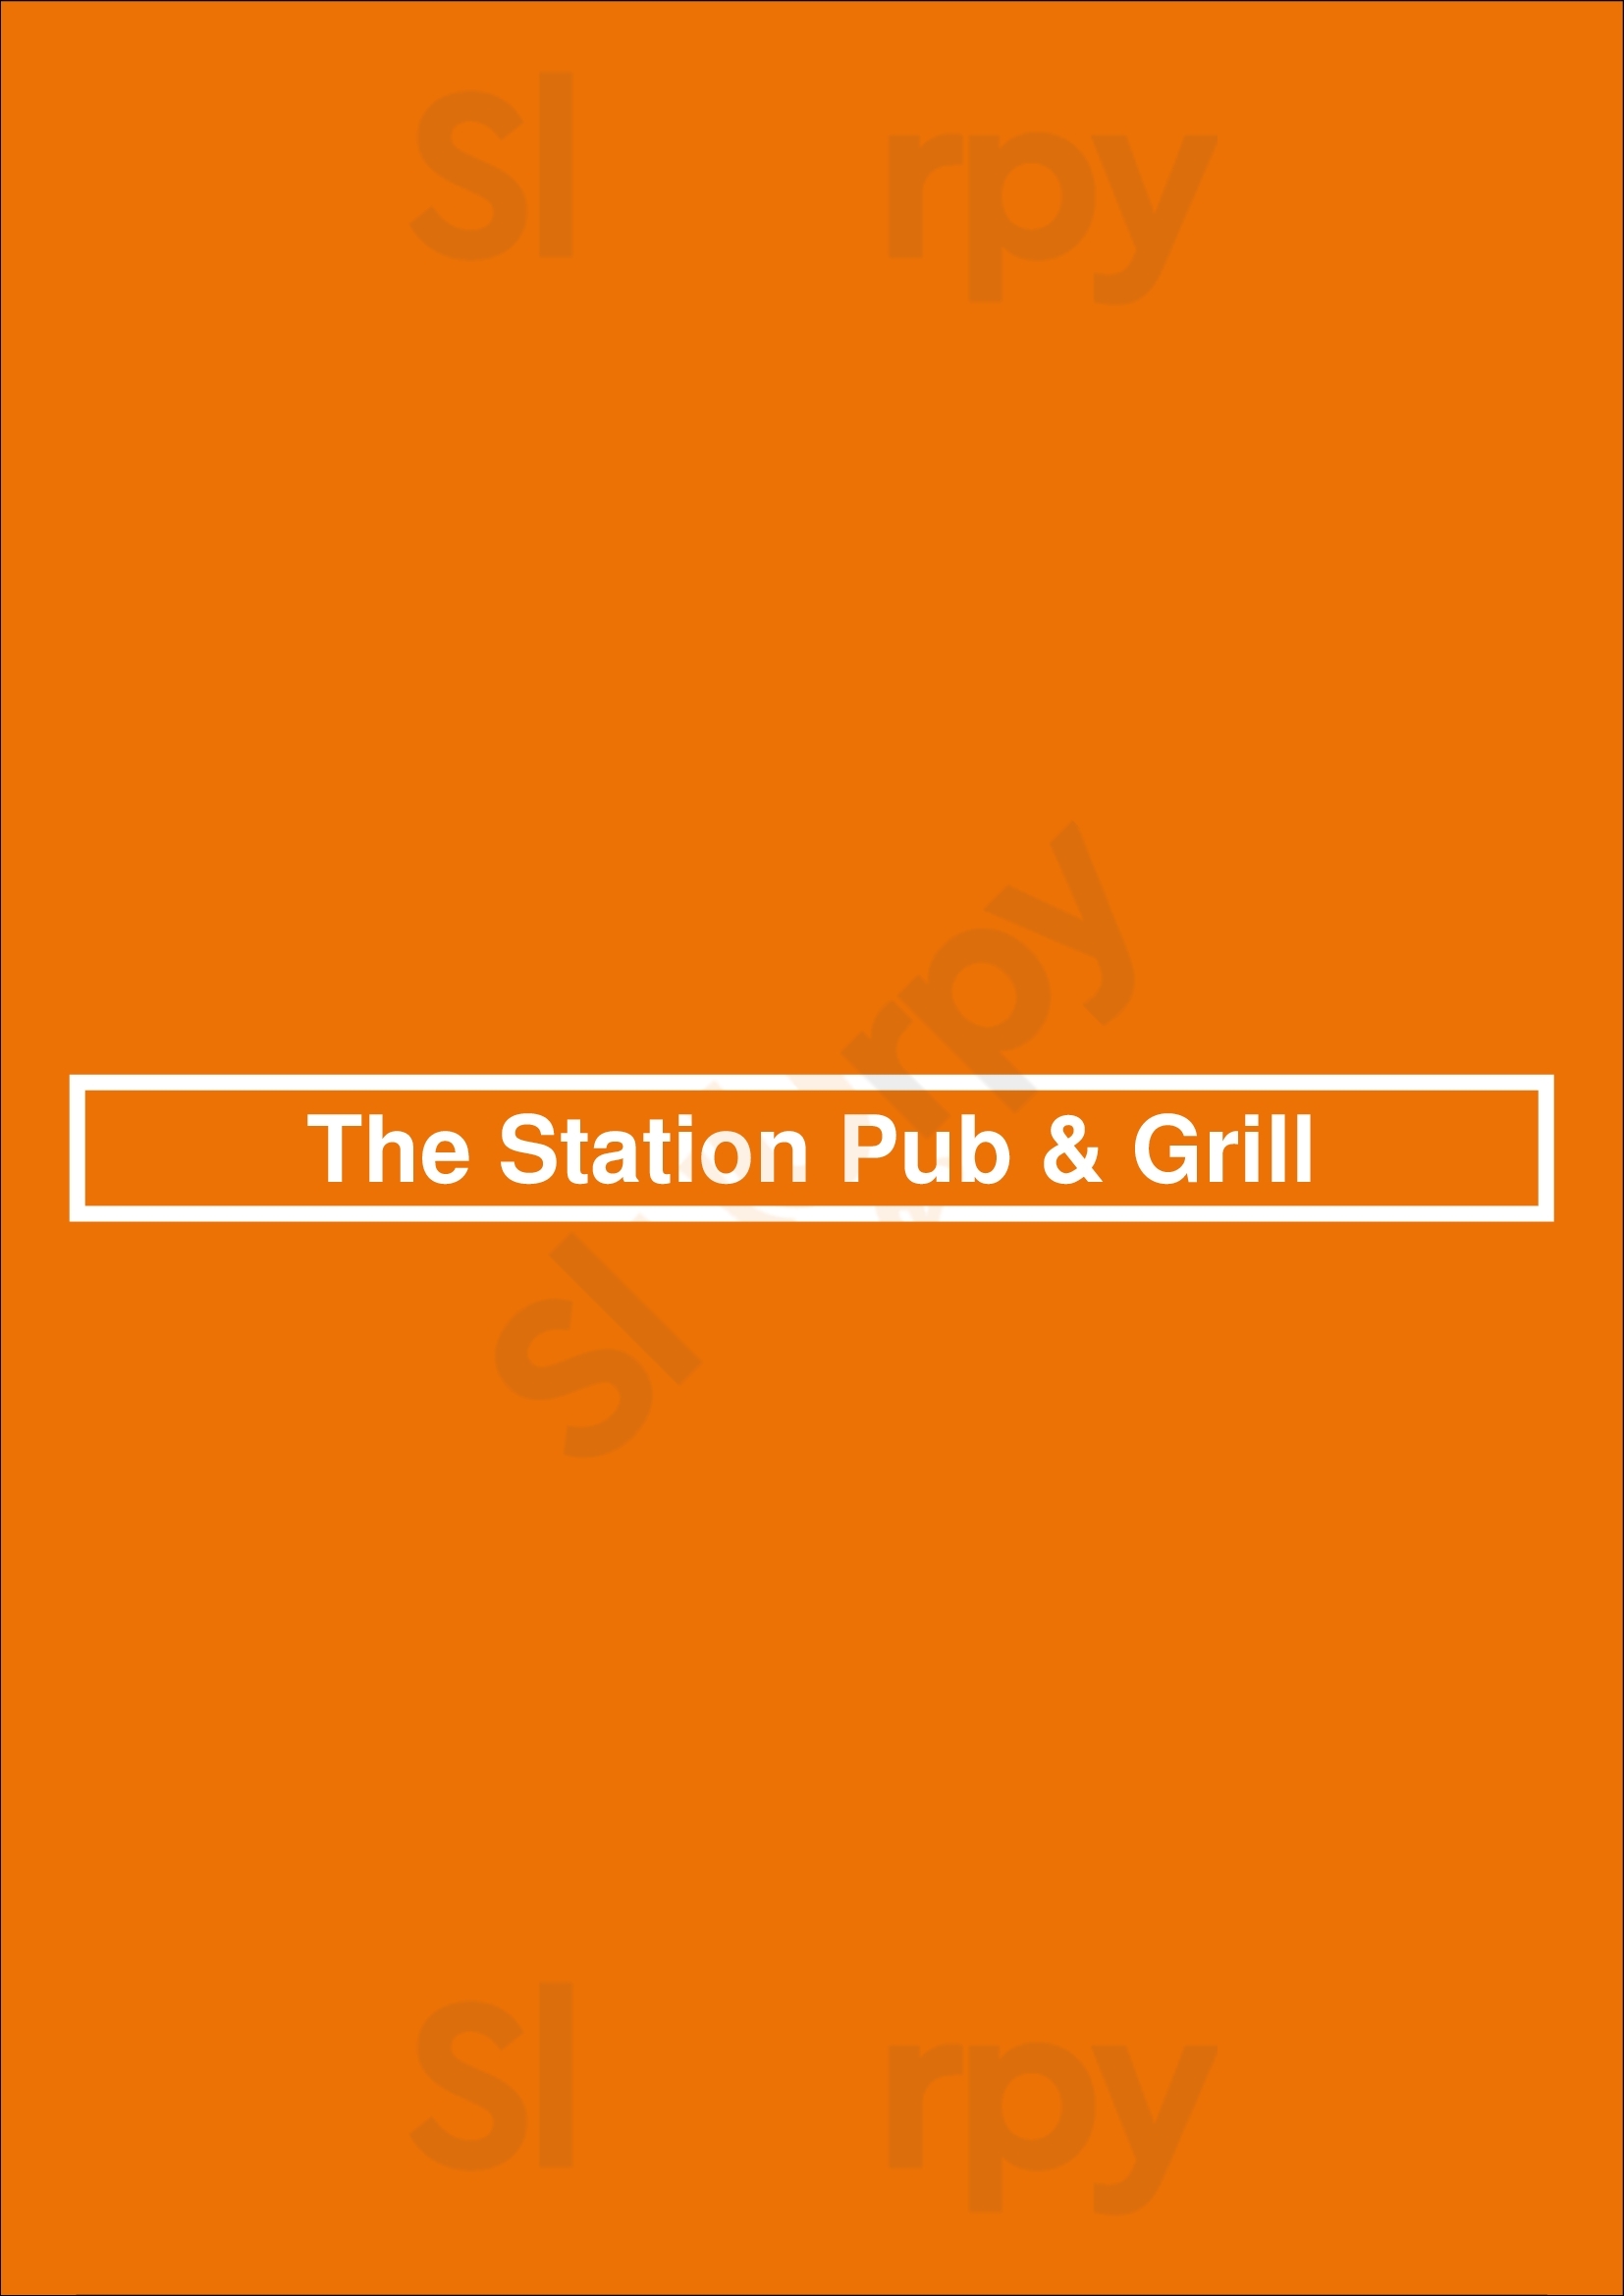 The Station Pub & Grill Tucson Menu - 1